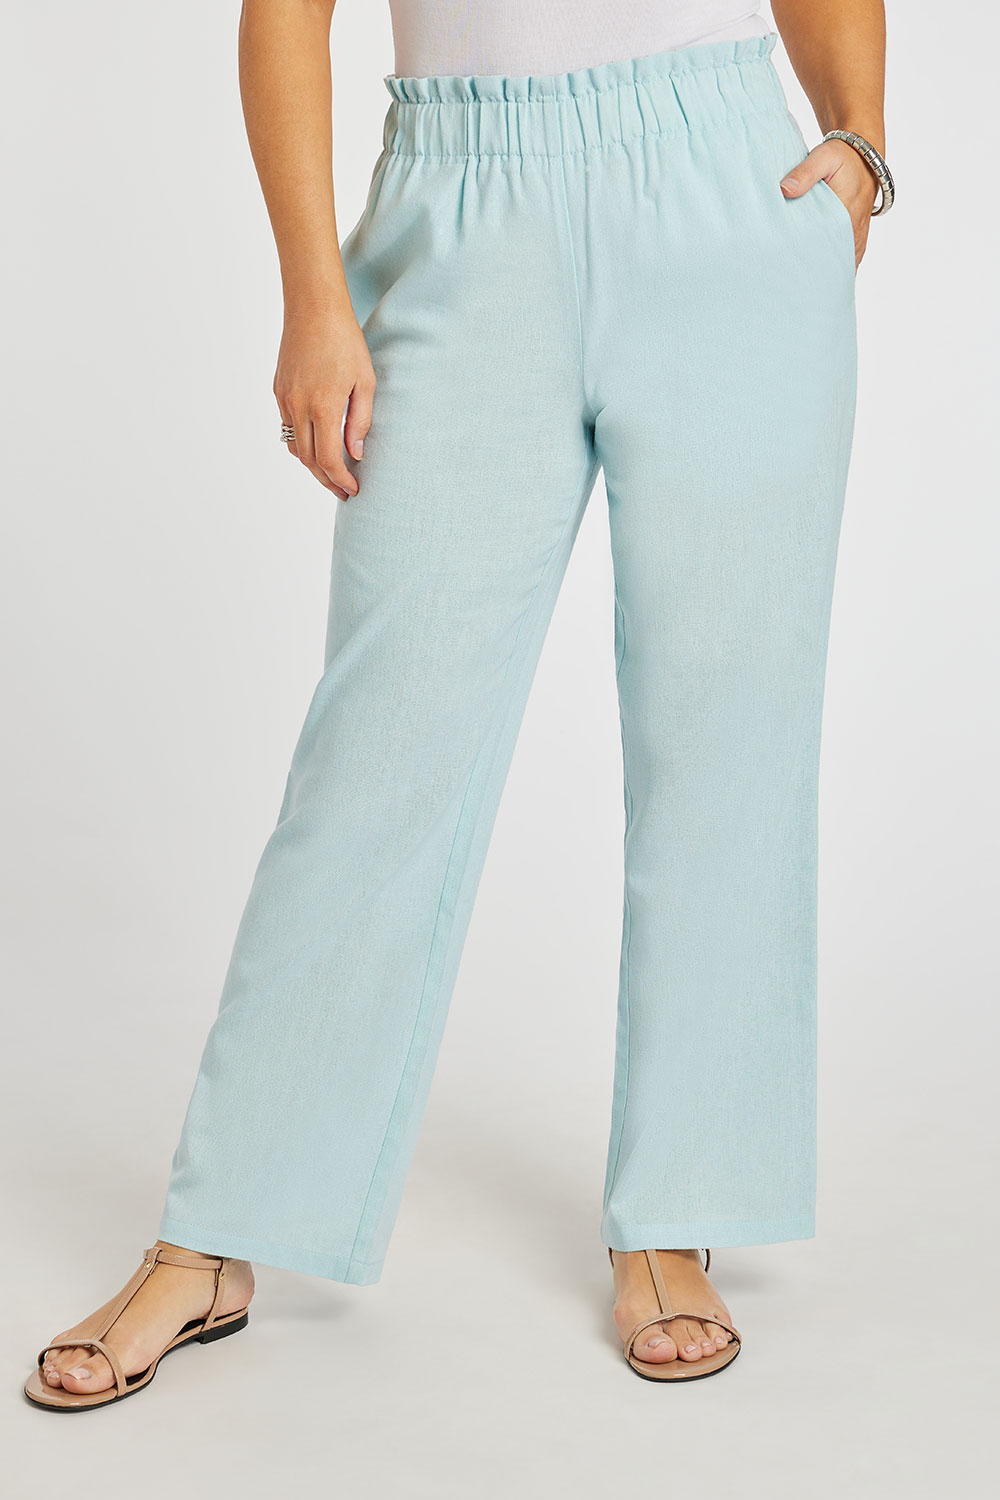 Women Cotton Linen Trousers Ladies Summer Casual Elastic Waist Bottoms  Pants UK  eBay